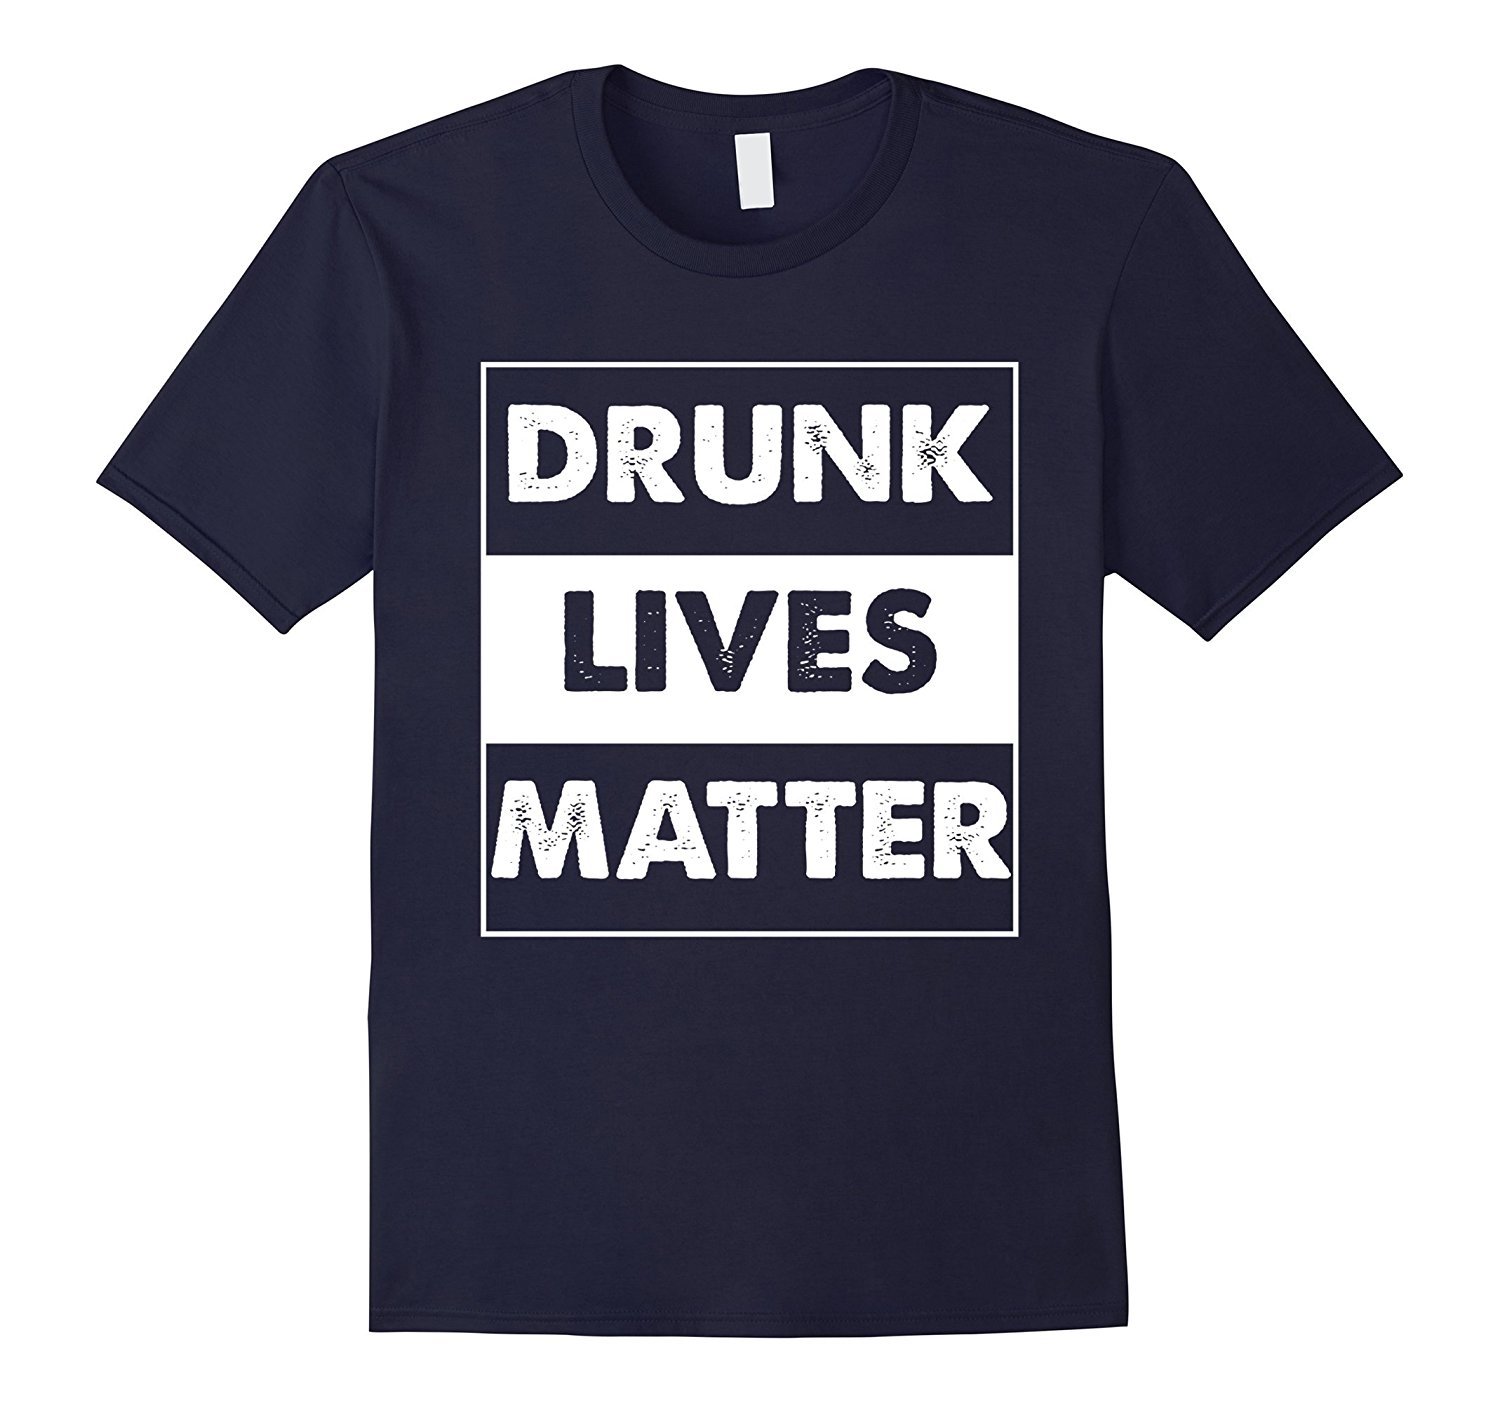 Best New Shirts - Drunk Lives Matter Funny Novelty Gift T-Shirt Men - $19.95 - $23.95